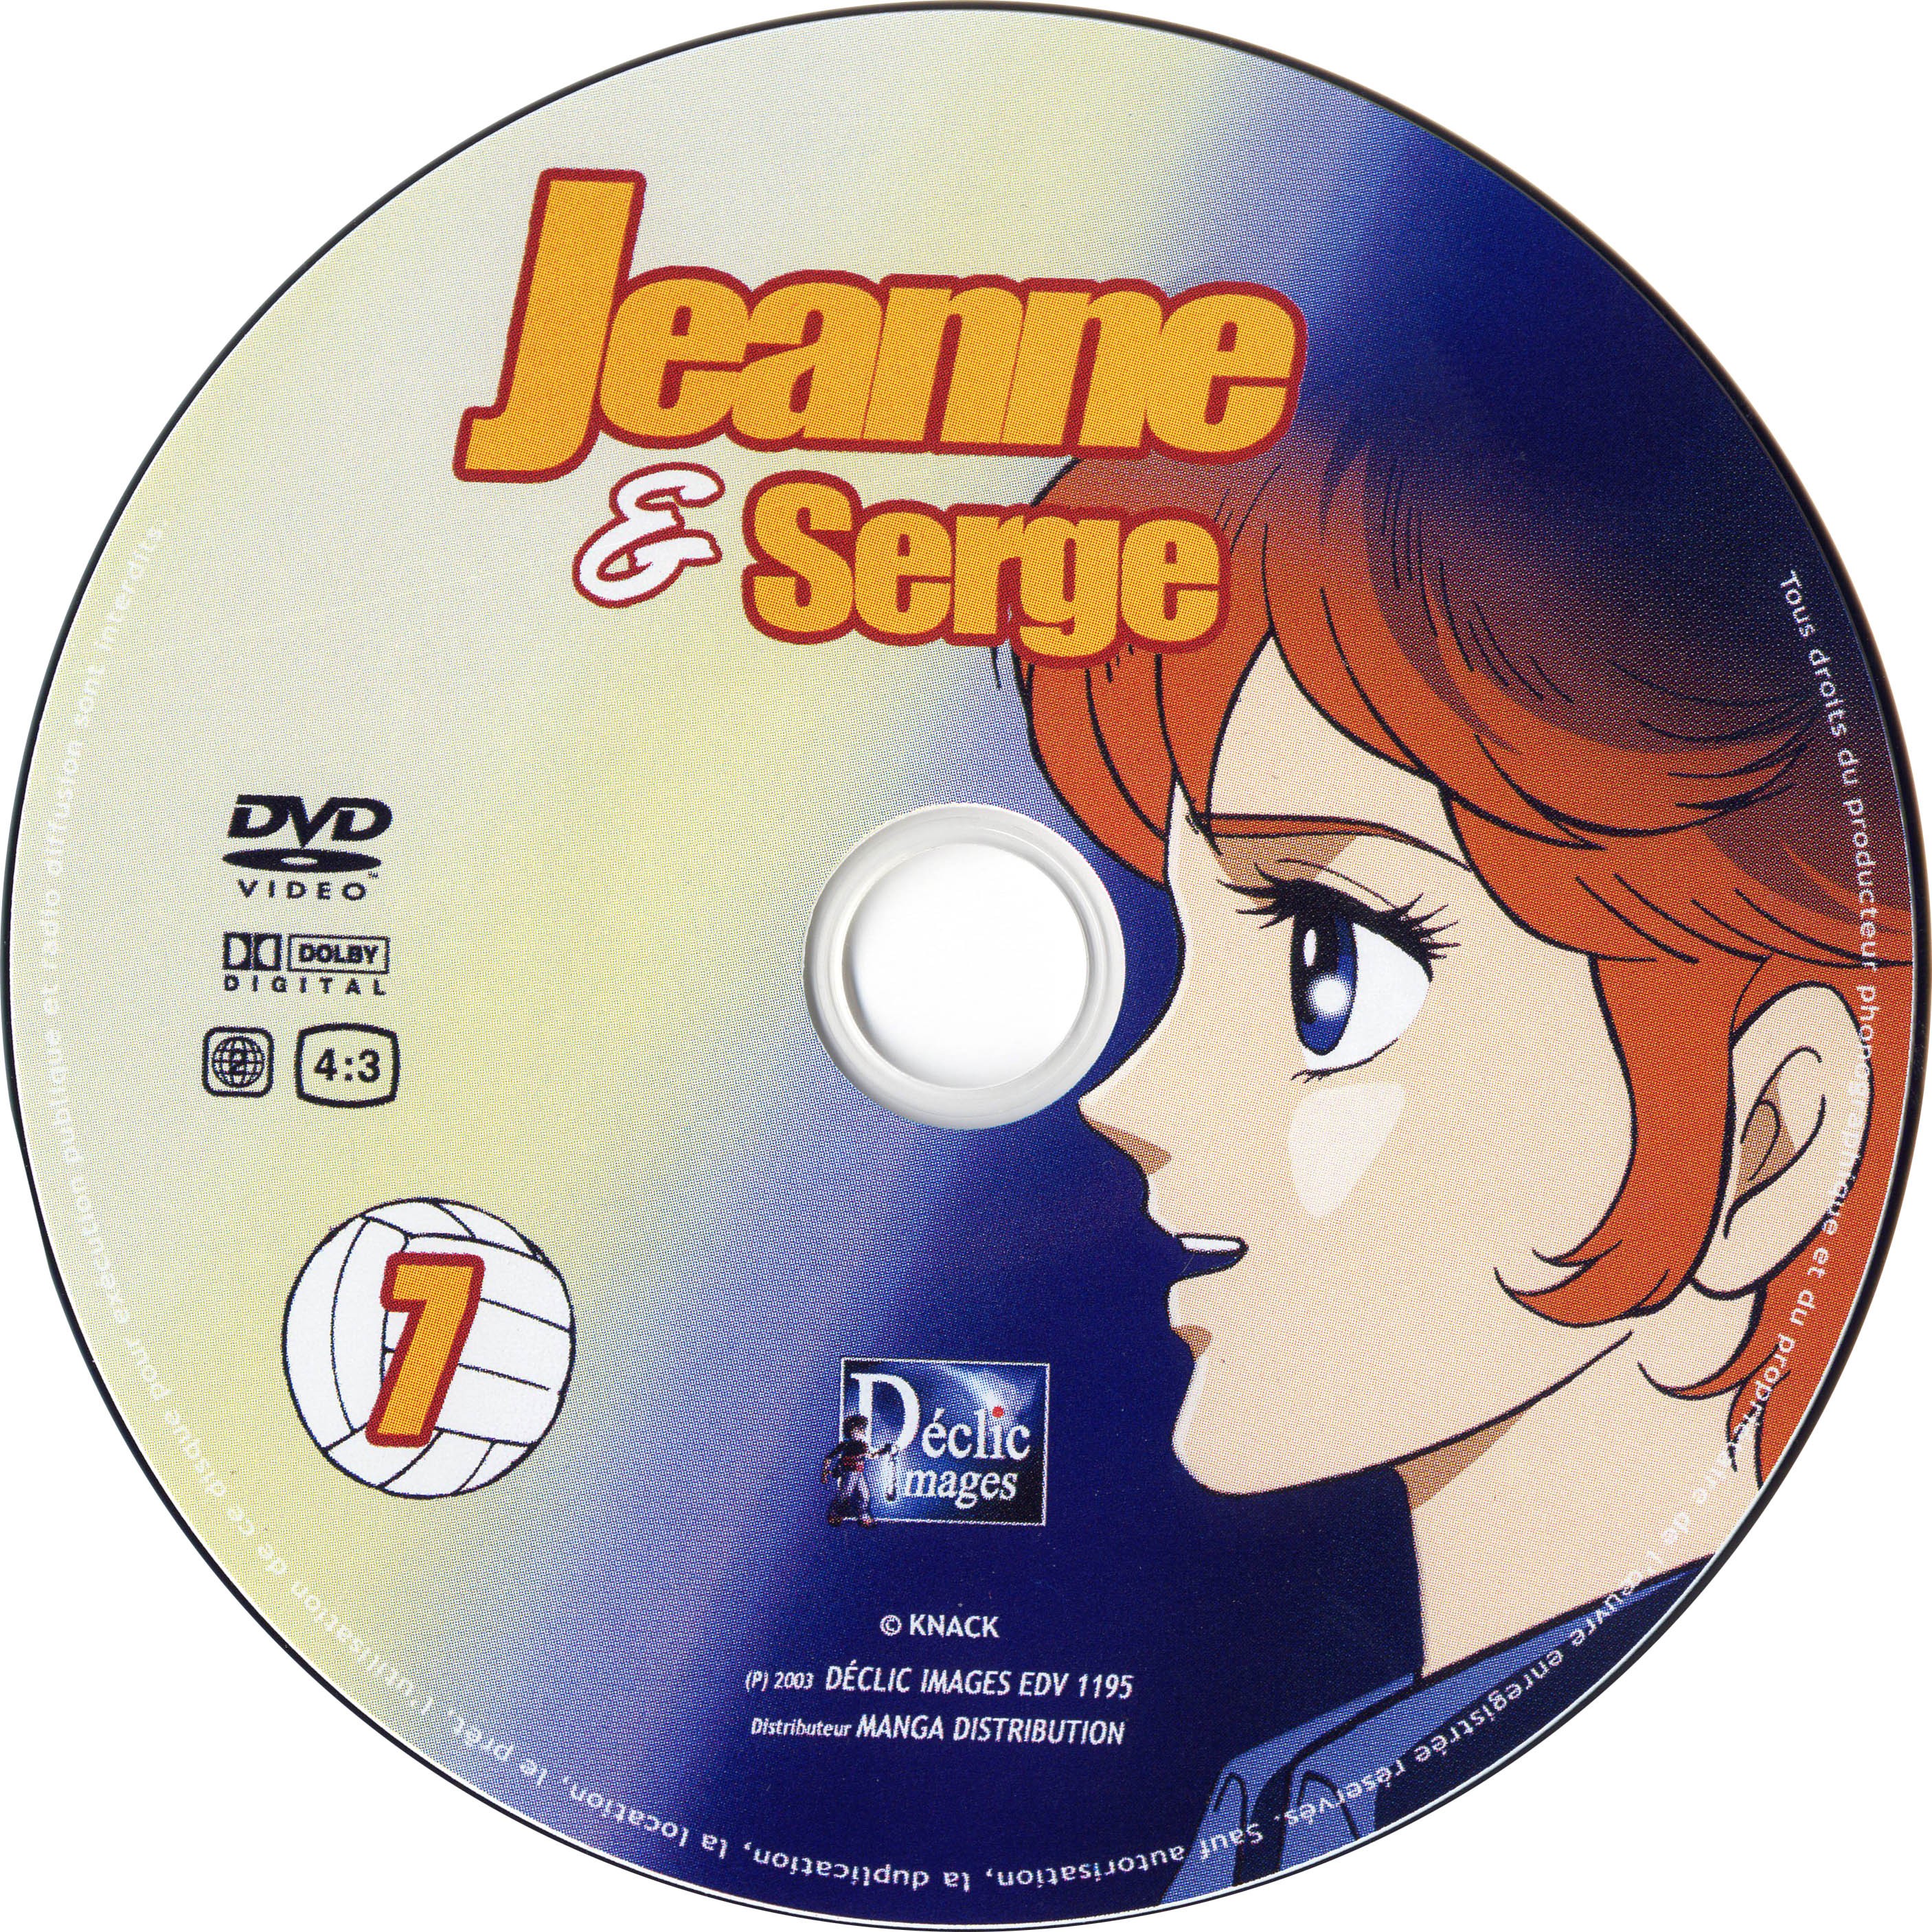 Jeanne et Serge vol 07